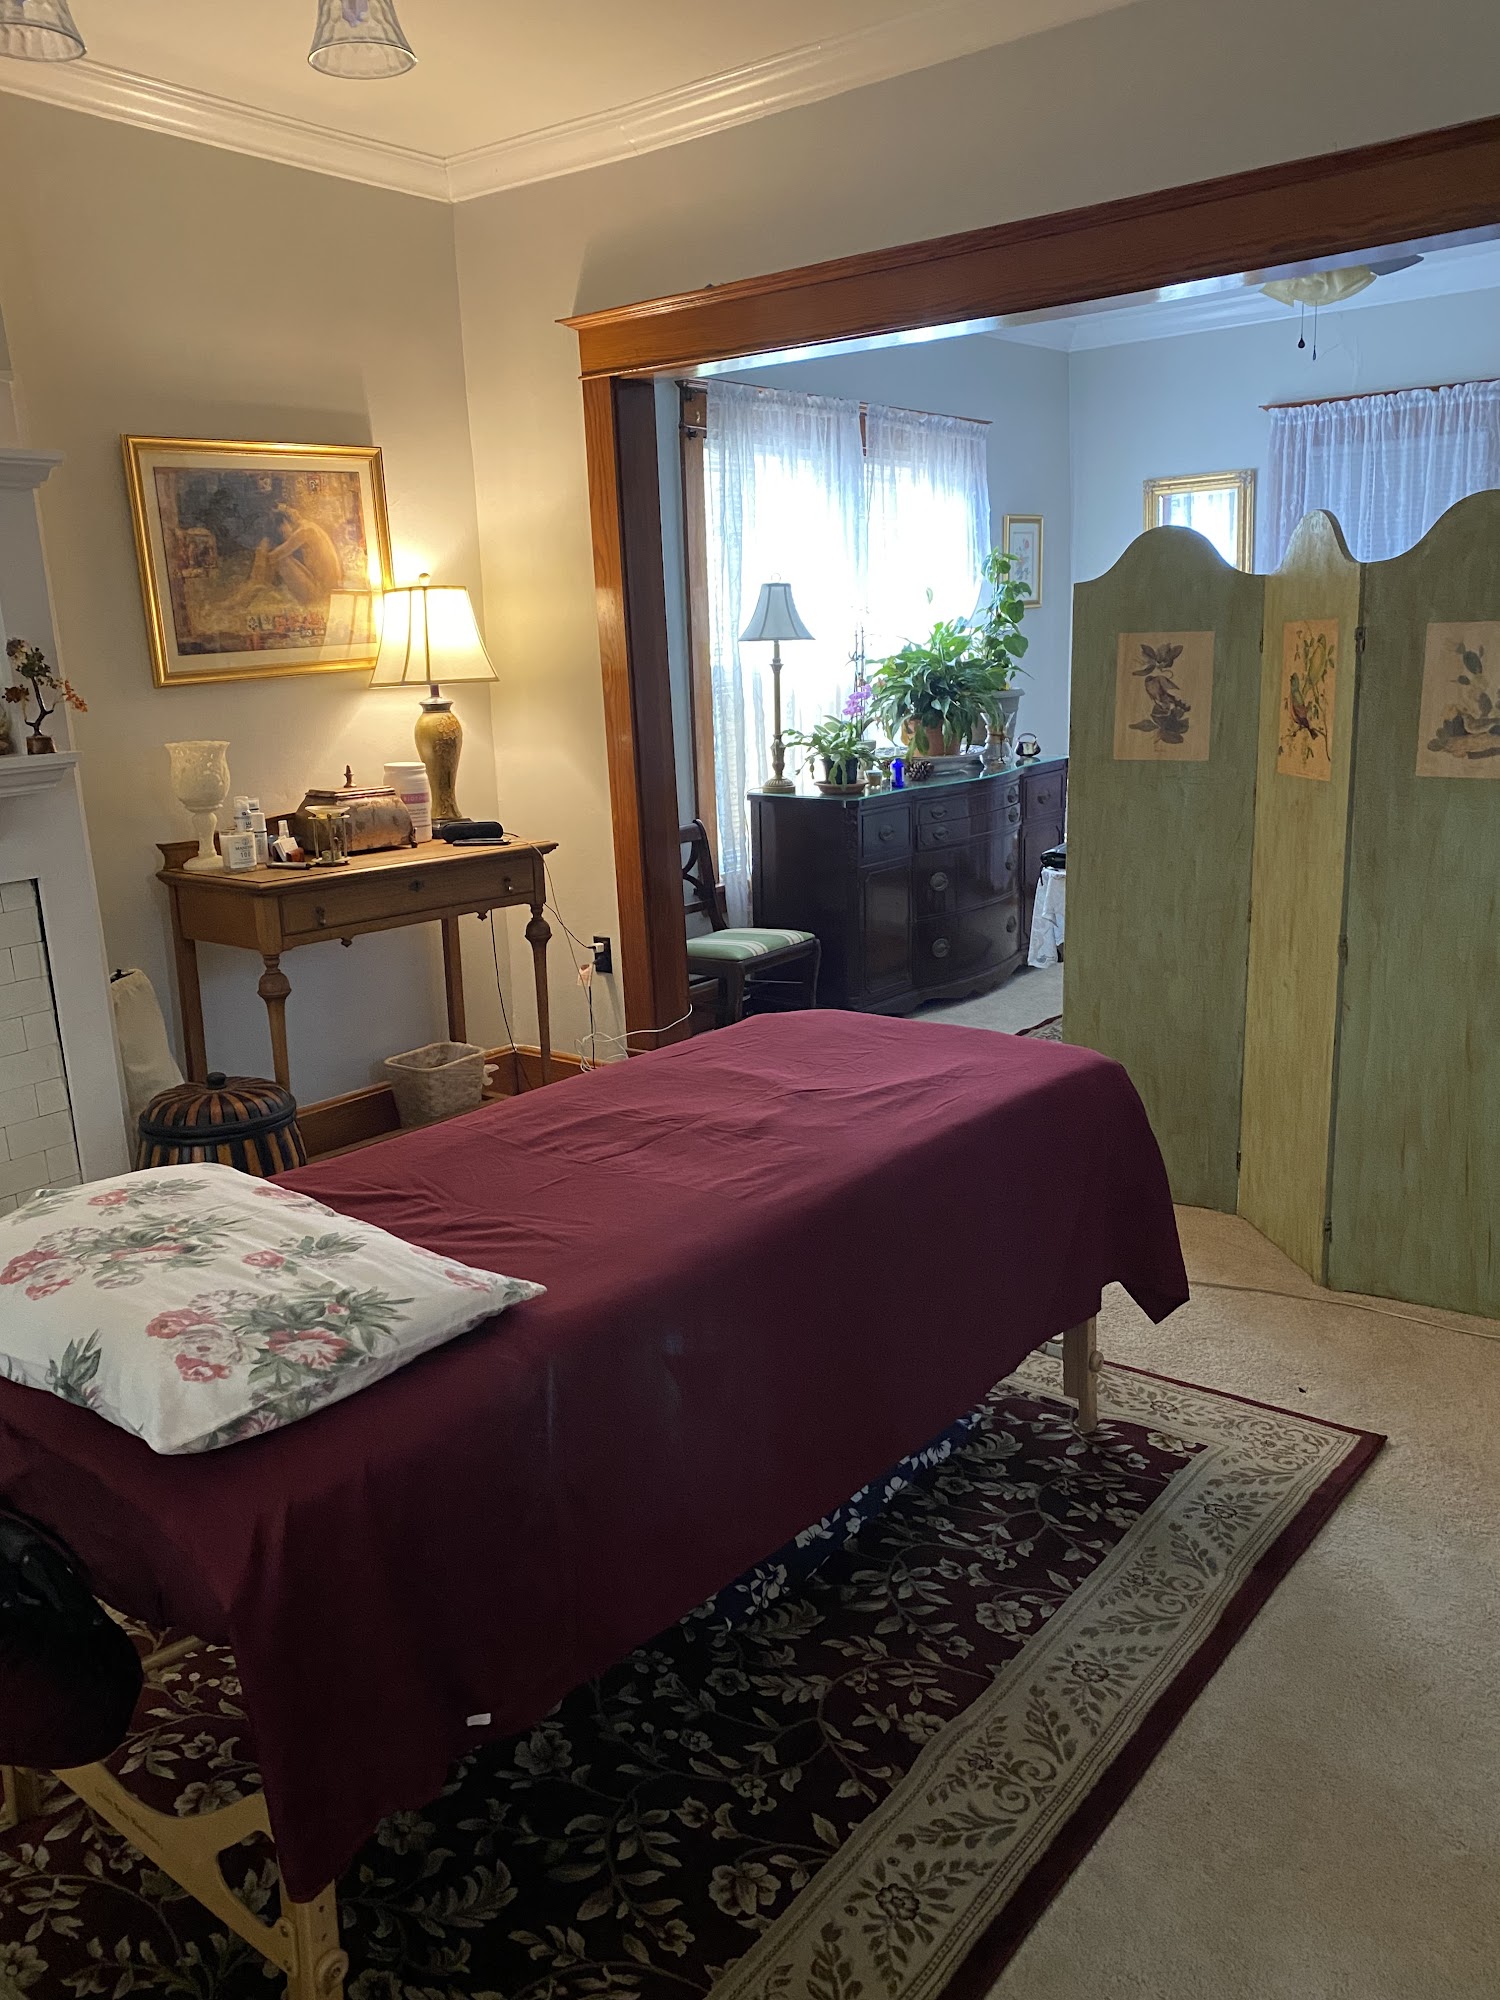 Massage Therapy by Steve Botuchis 129 Sherman Ave, Fort Thomas Kentucky 41075